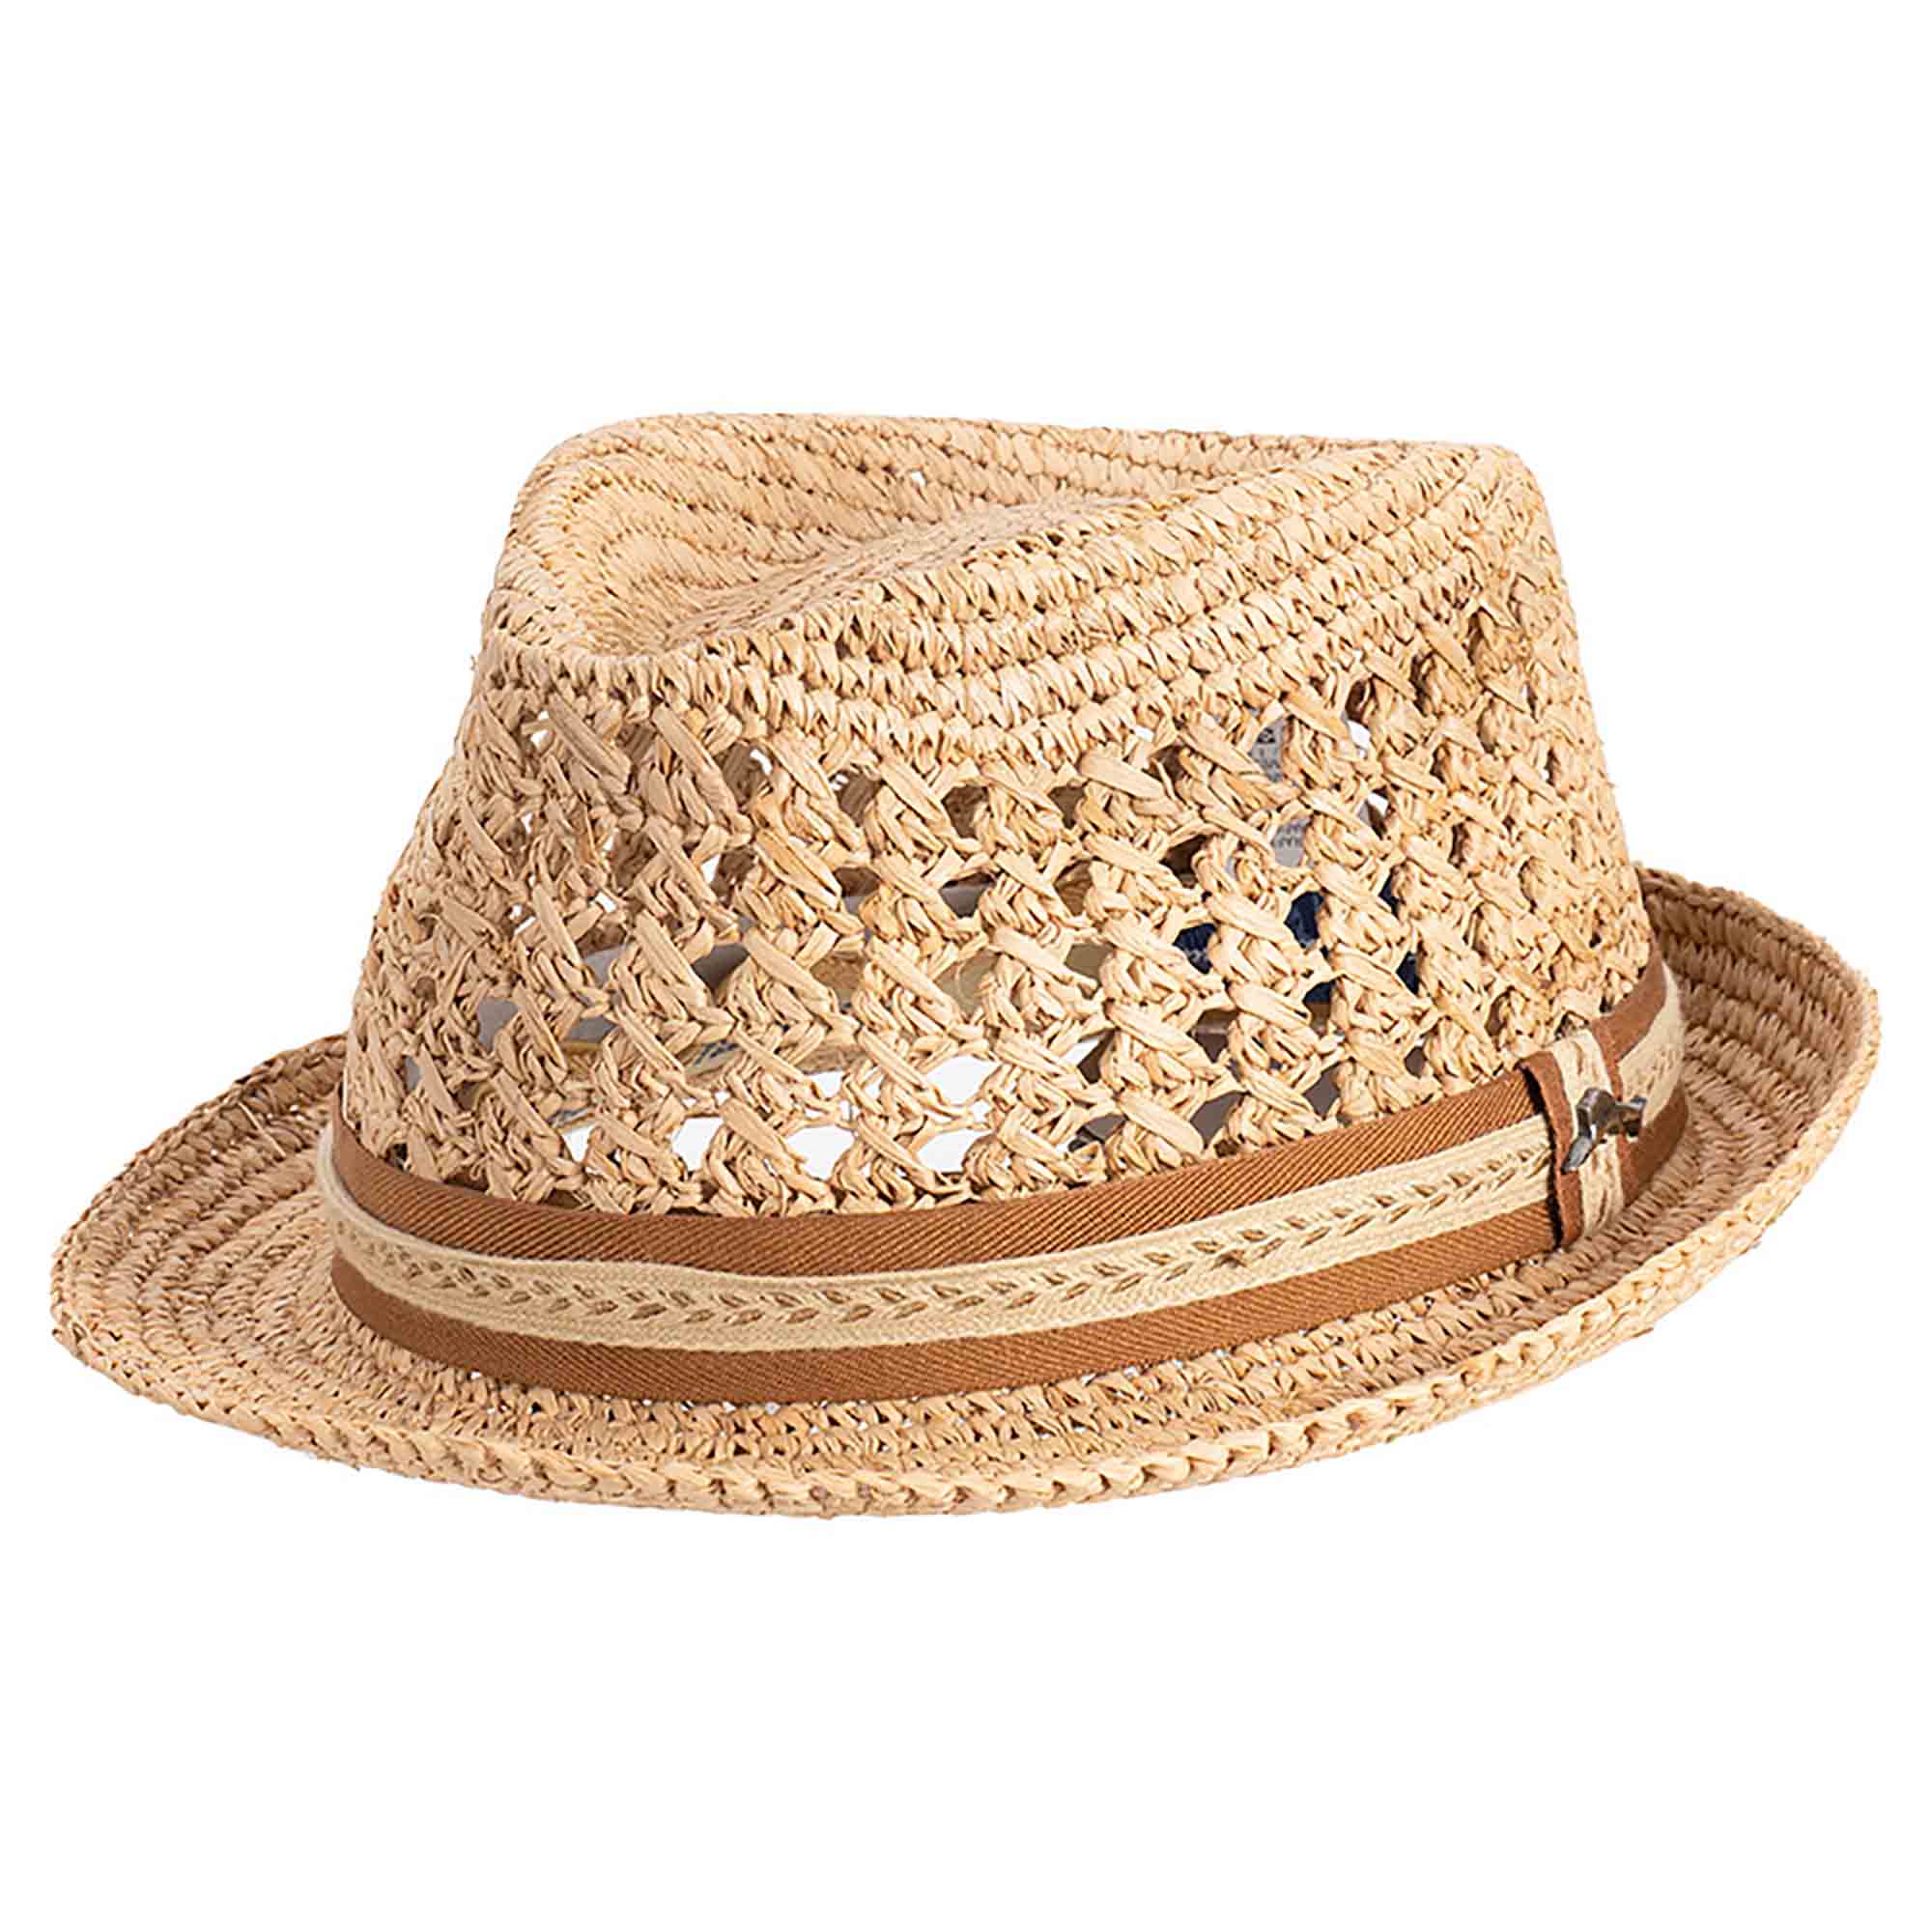 Tommy Bahama Crocheted Raffia Hat